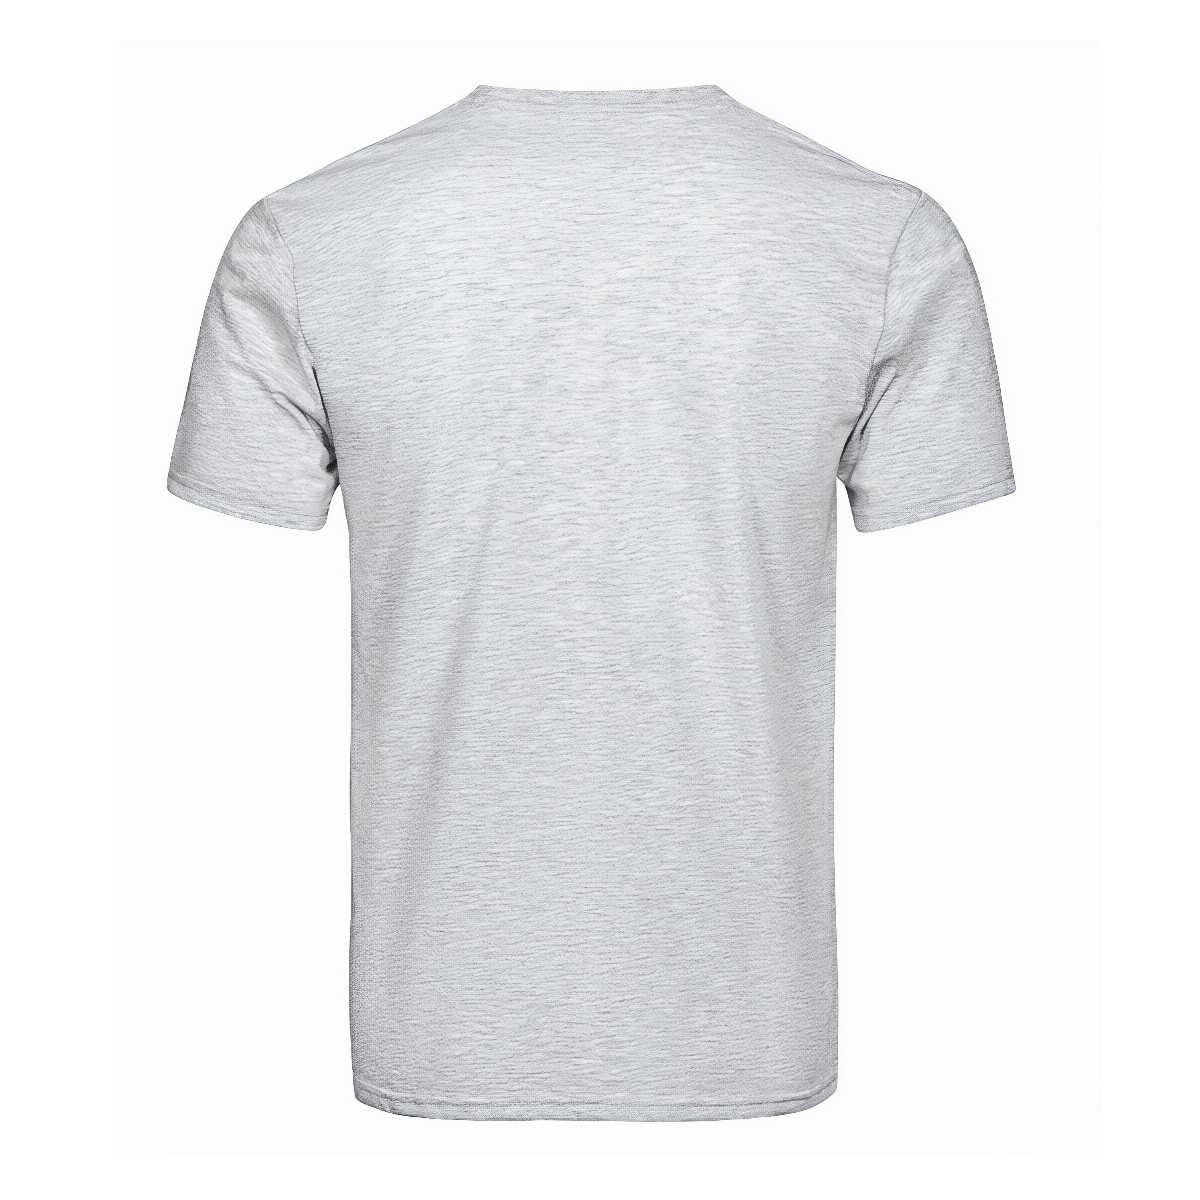 Nicolson Tartan Crest T-shirt - I'm not yelling style